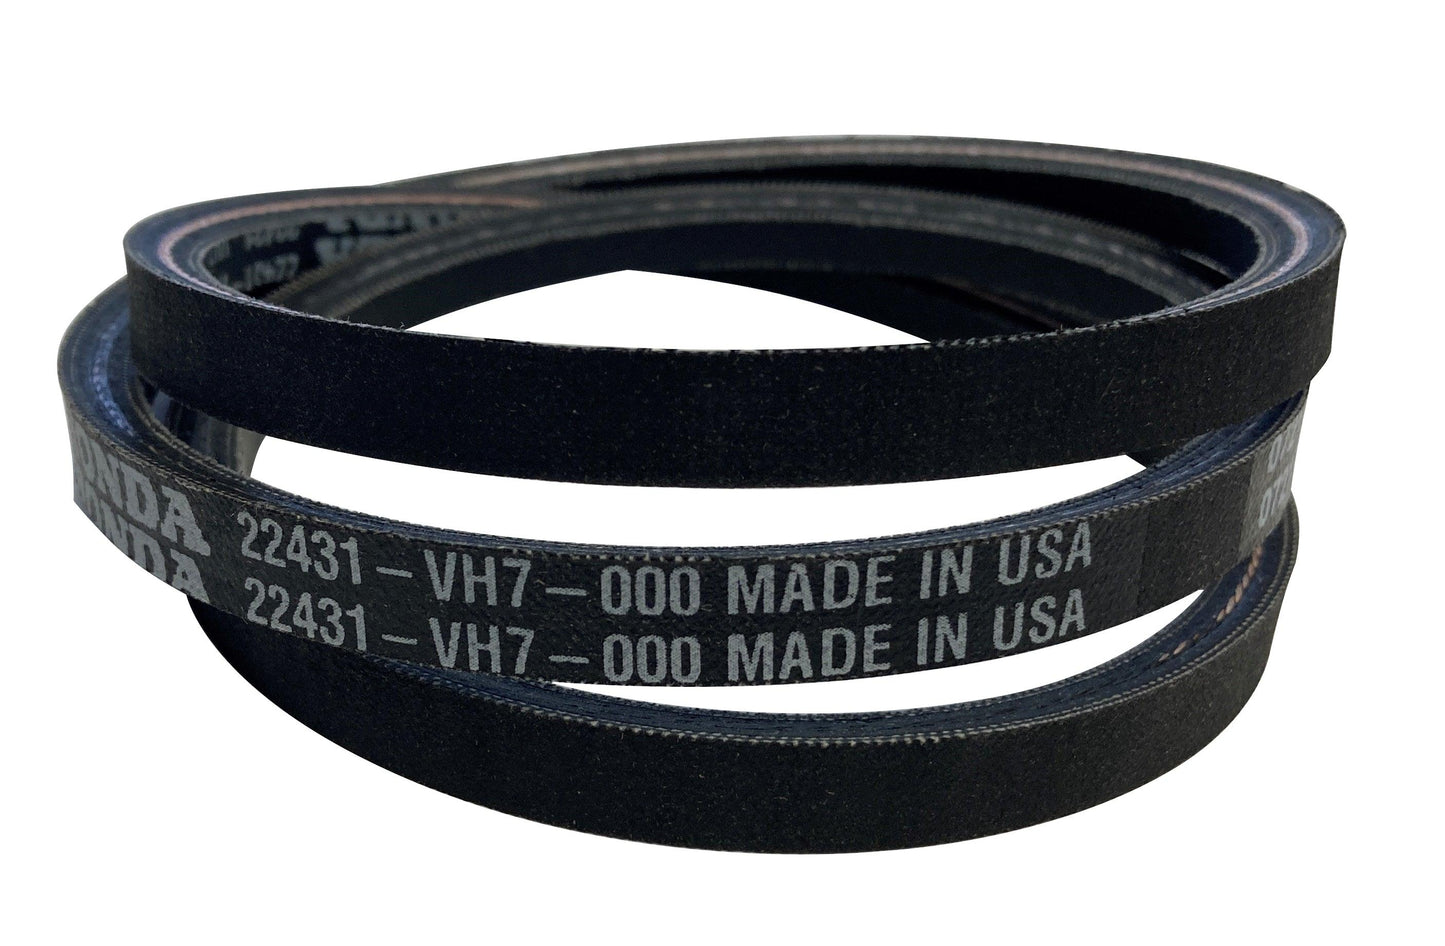 Honda OEM Belt - 22431-VH7-000